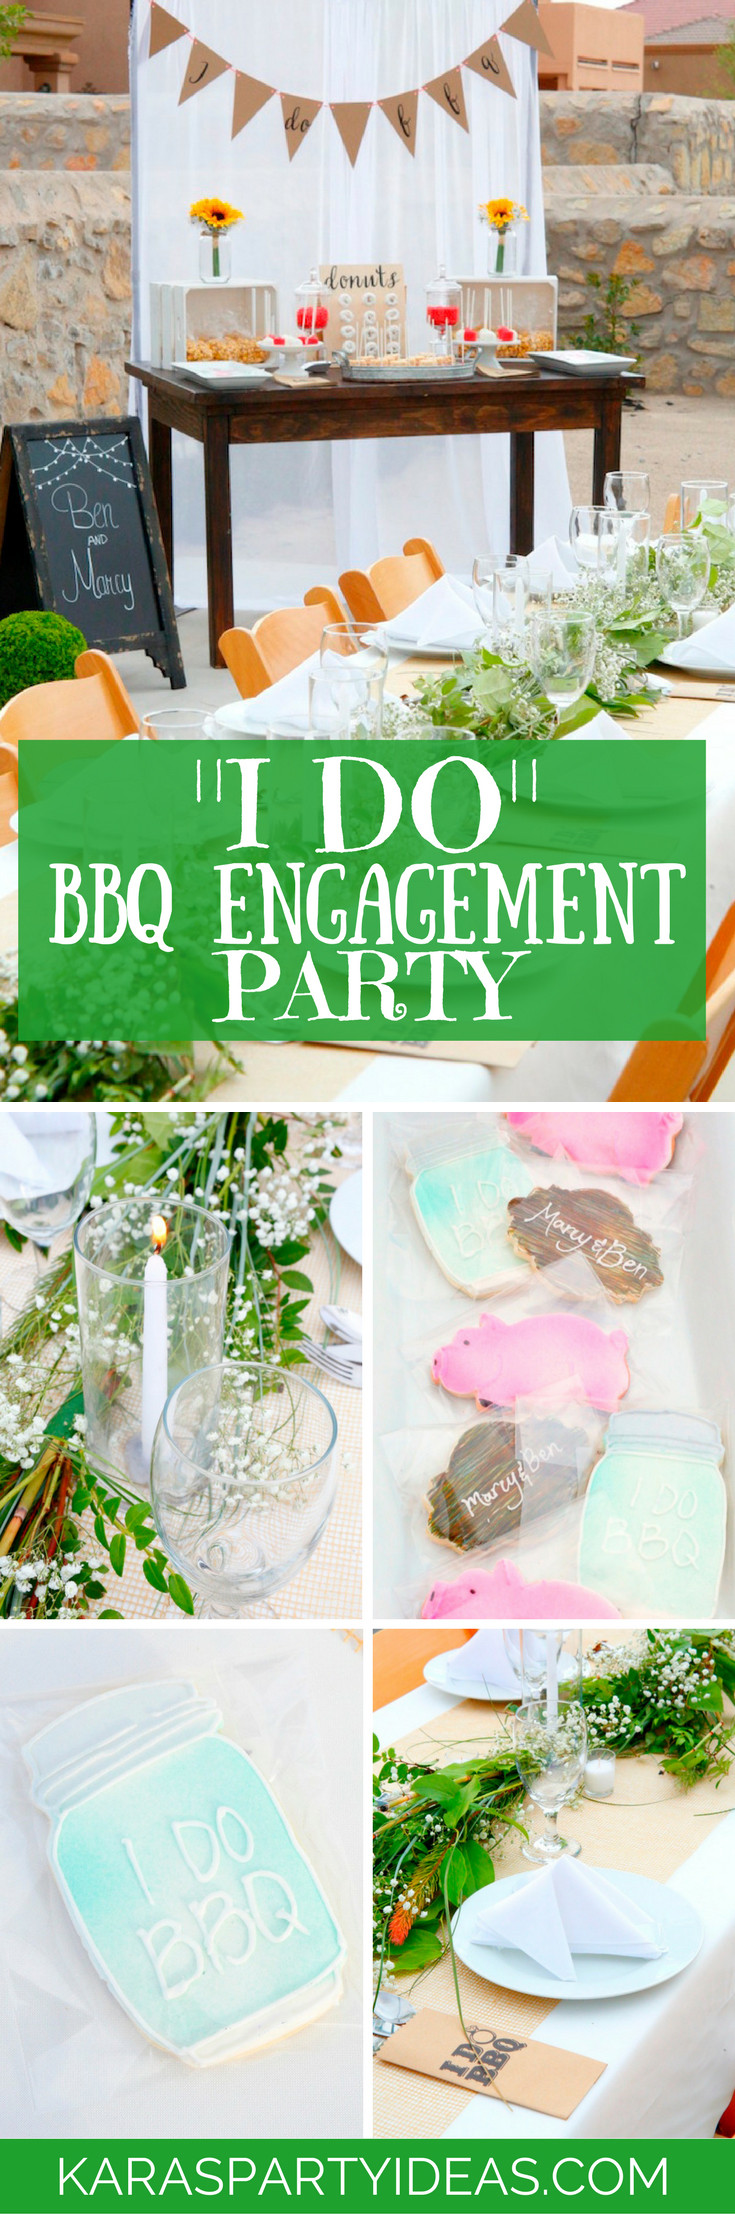 Bbq Engagement Party Ideas
 Kara s Party Ideas "I Do" BBQ Engagement Party